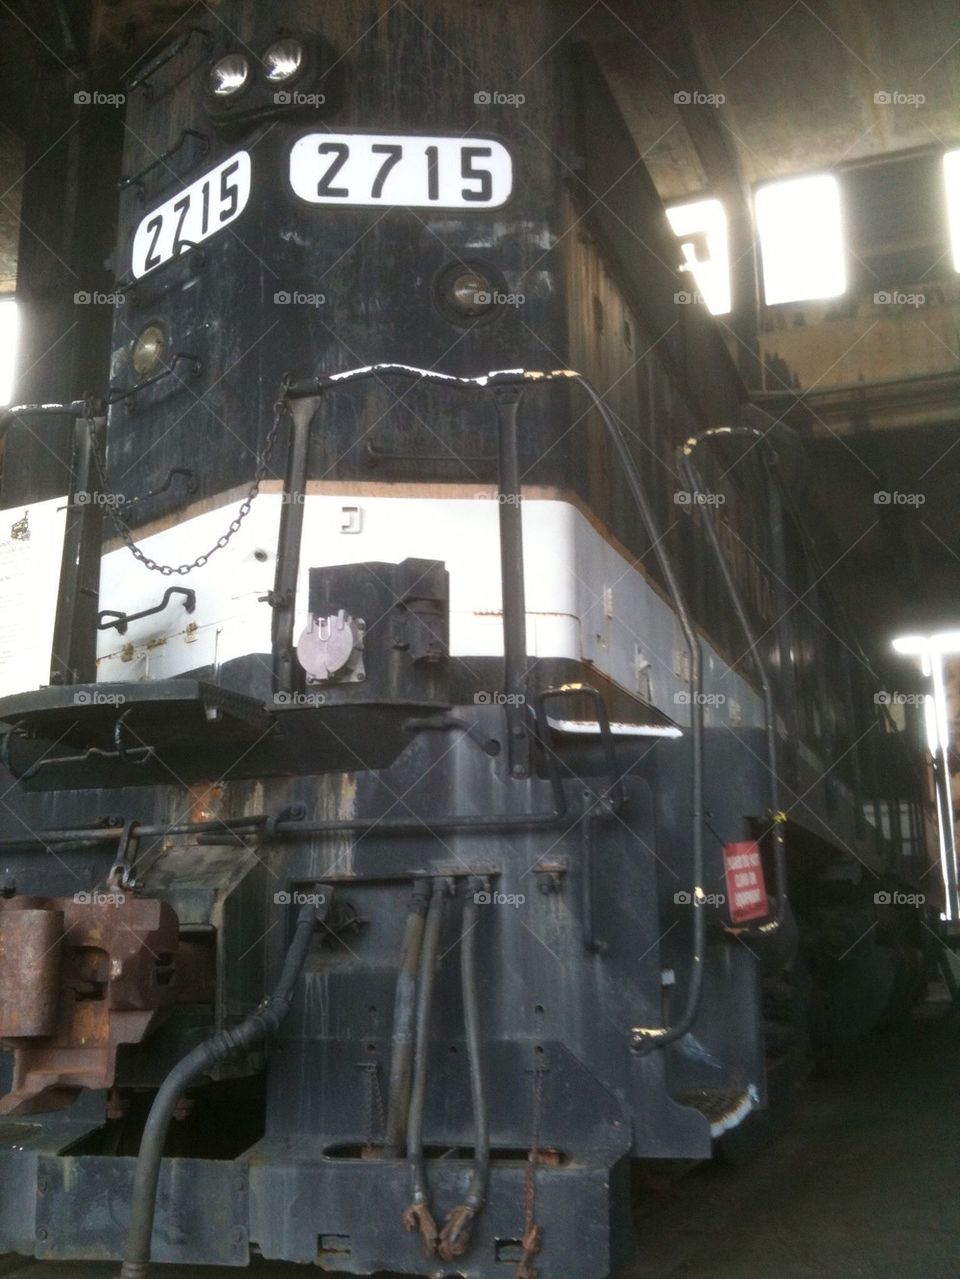 2715 locomotive 